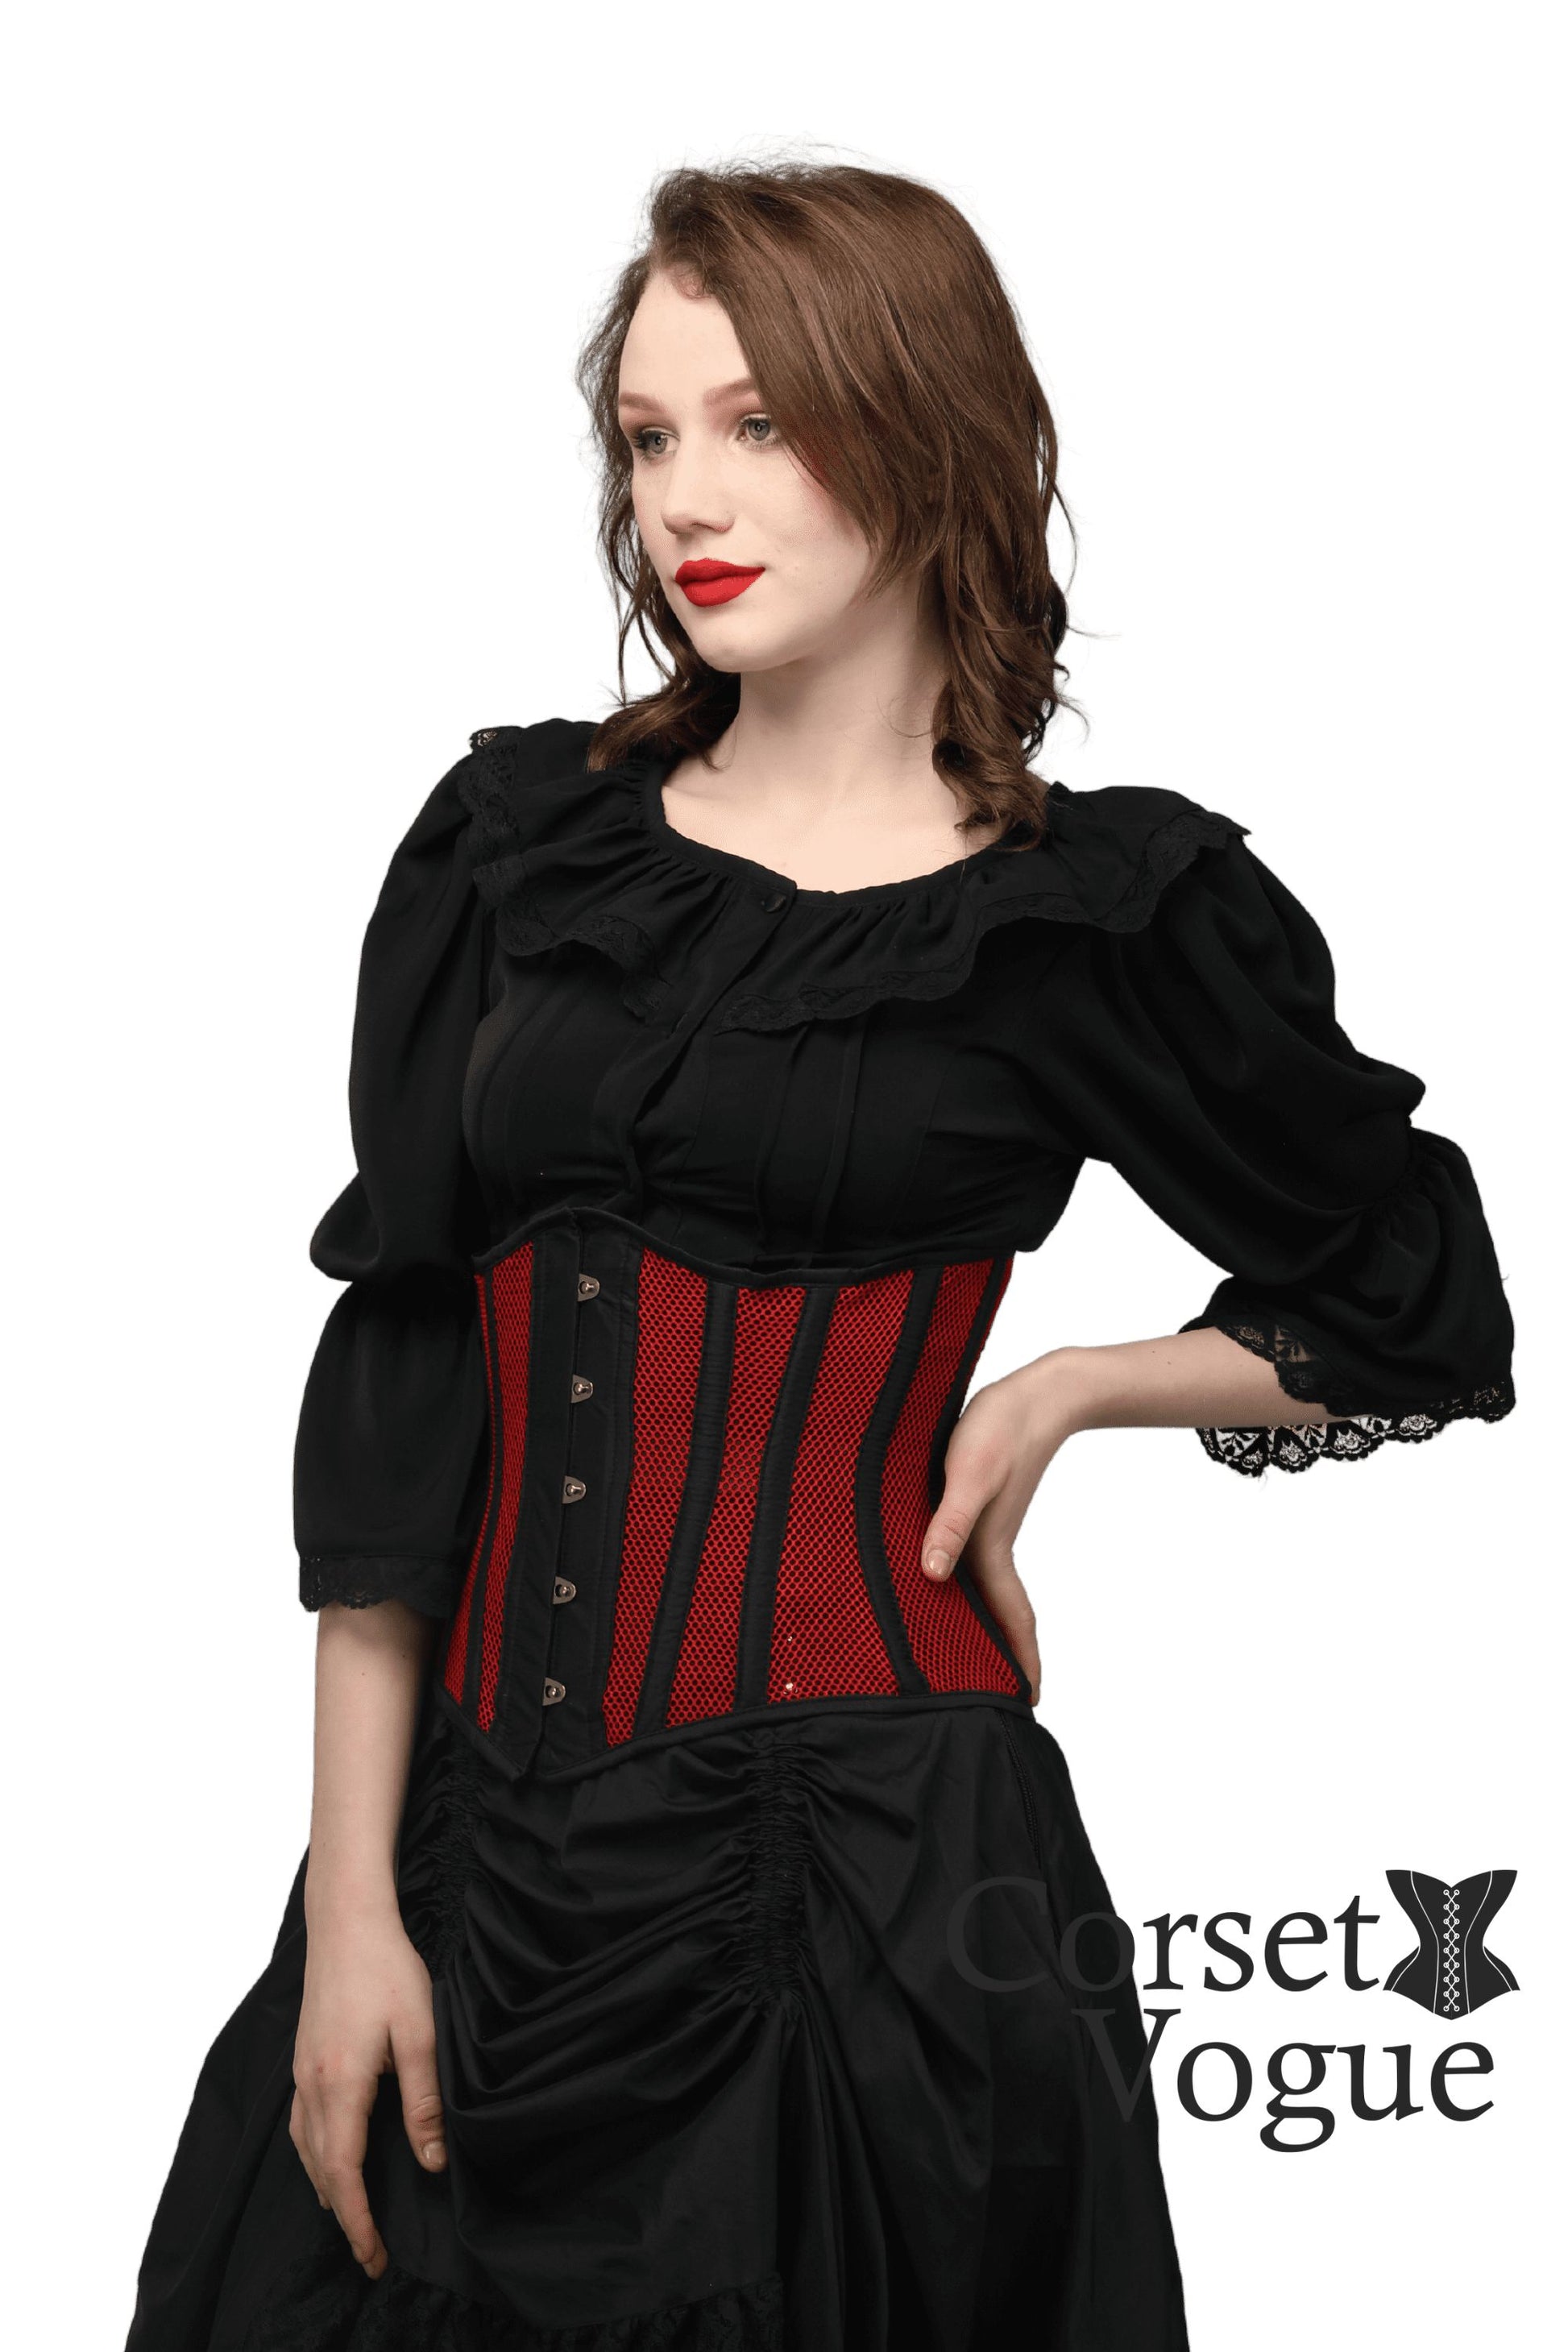 mesh corset otherside 